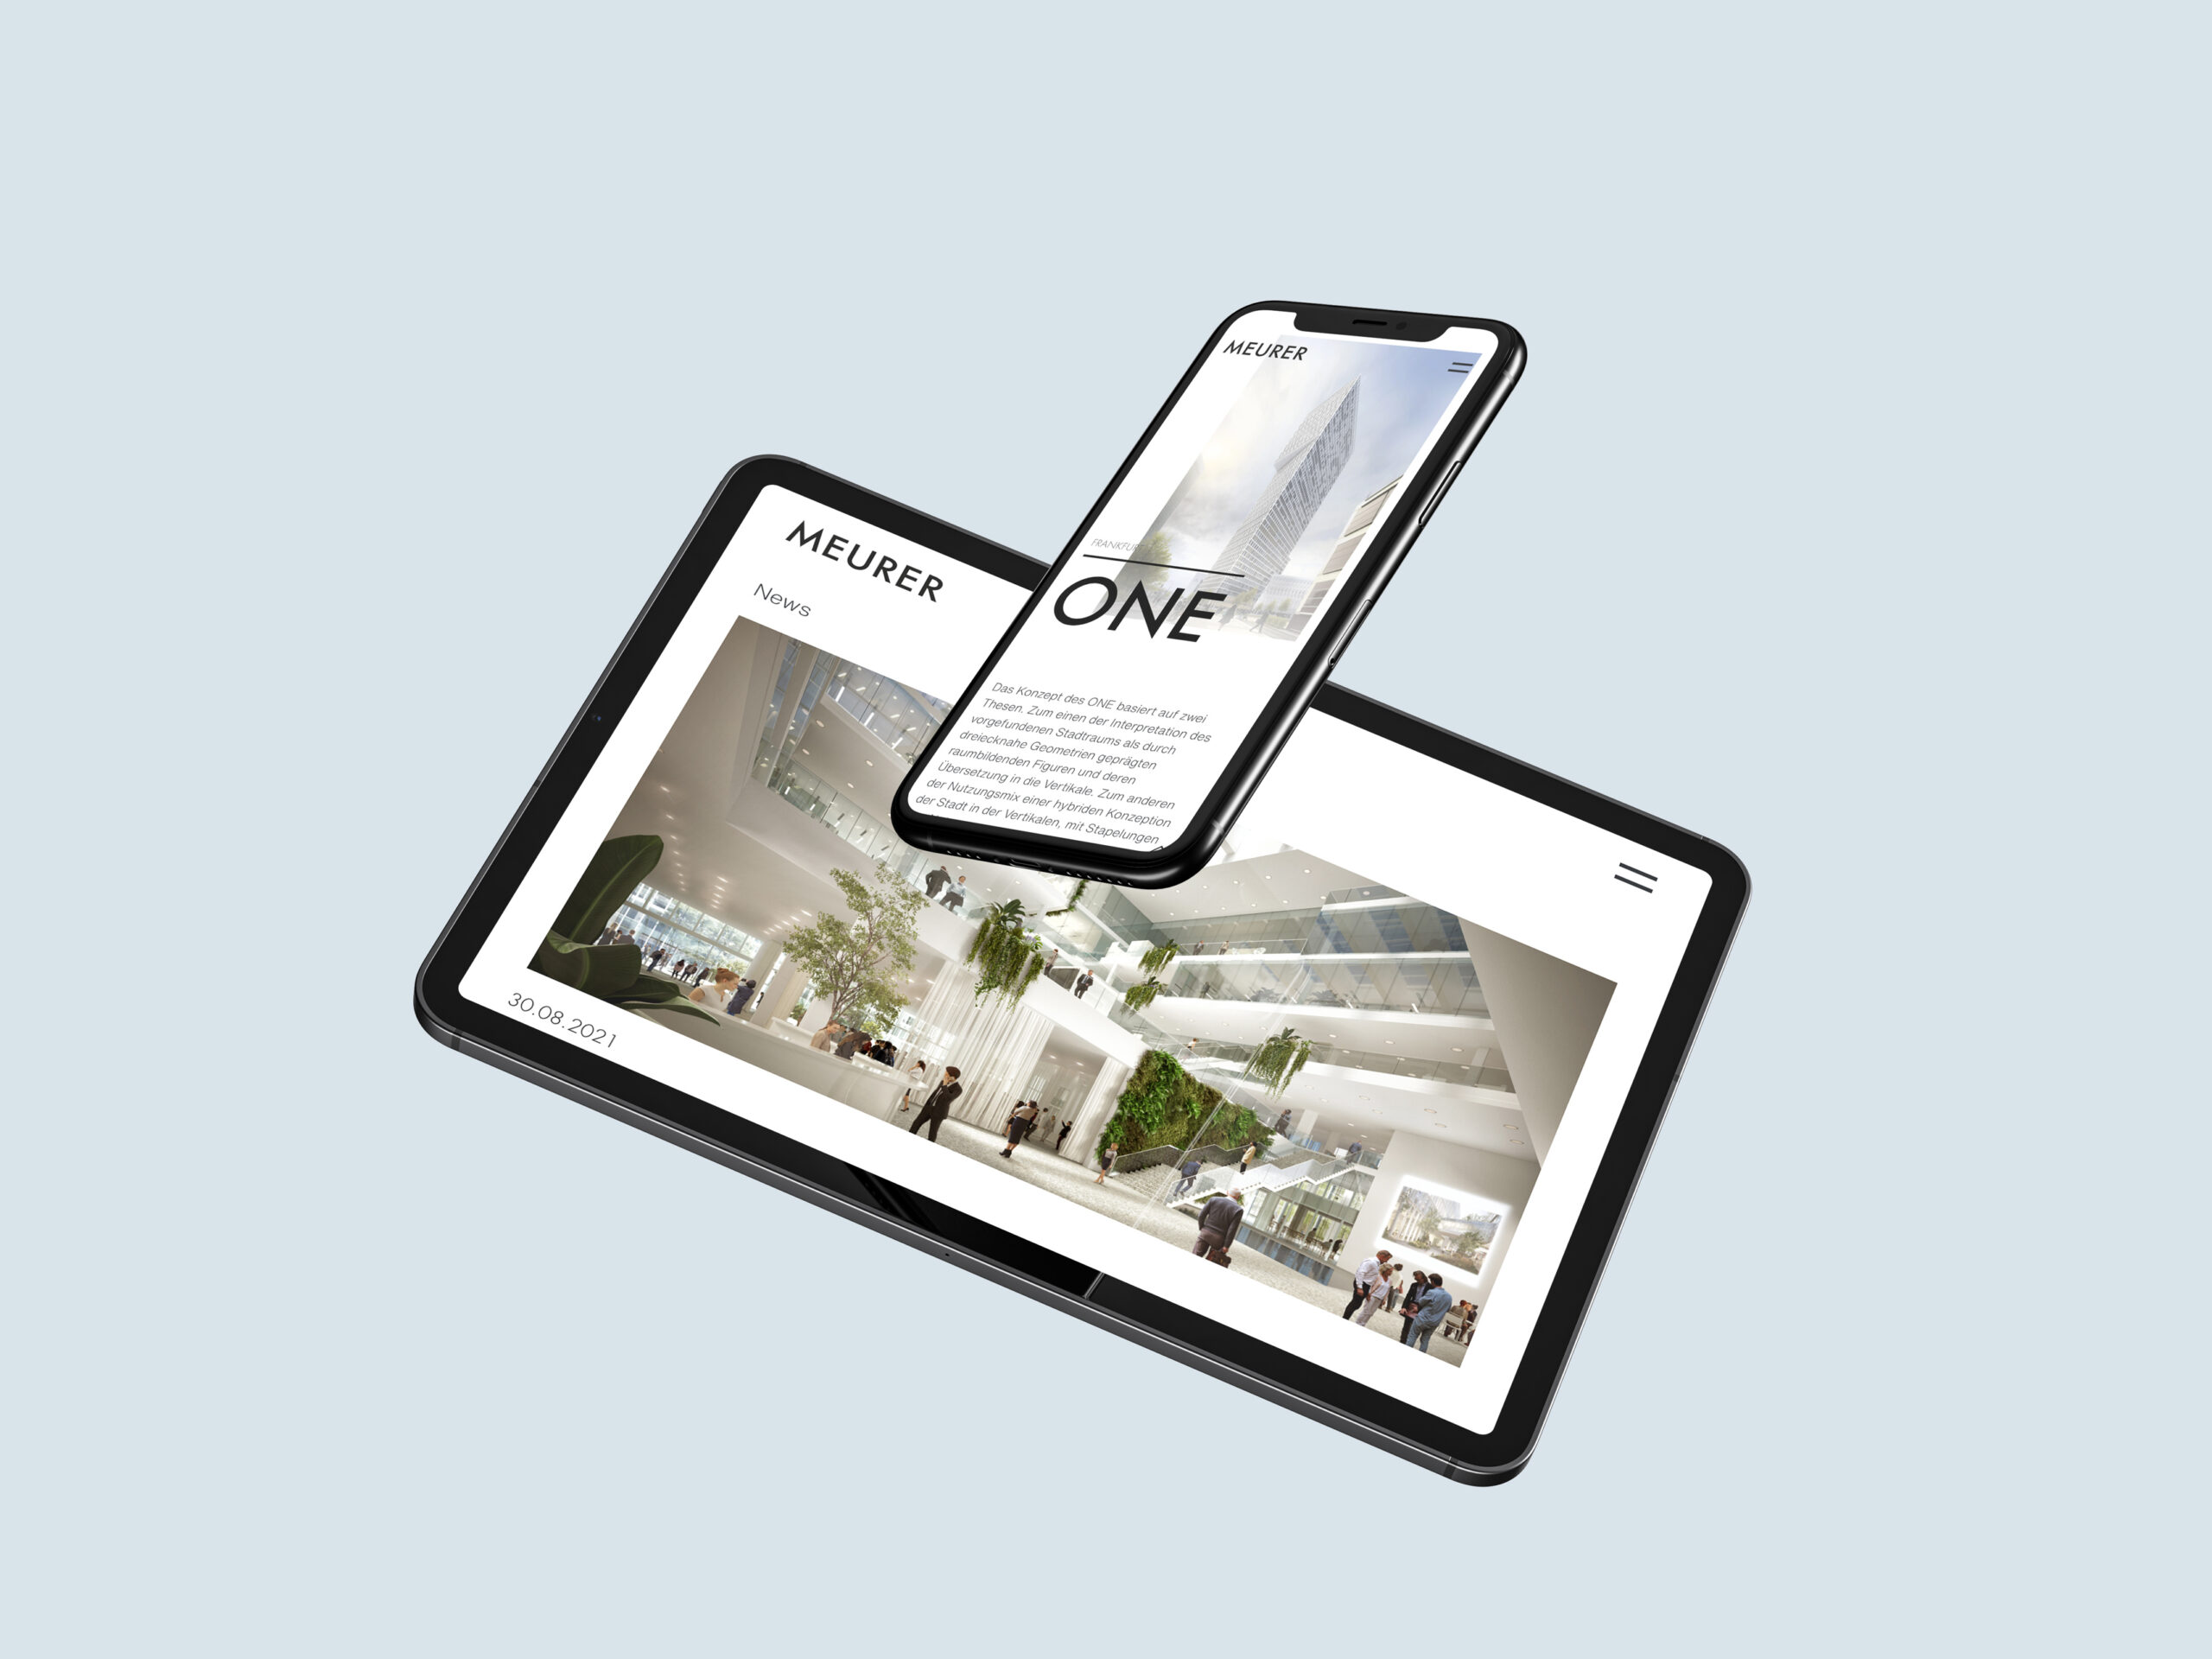 Meurer Architekten Website